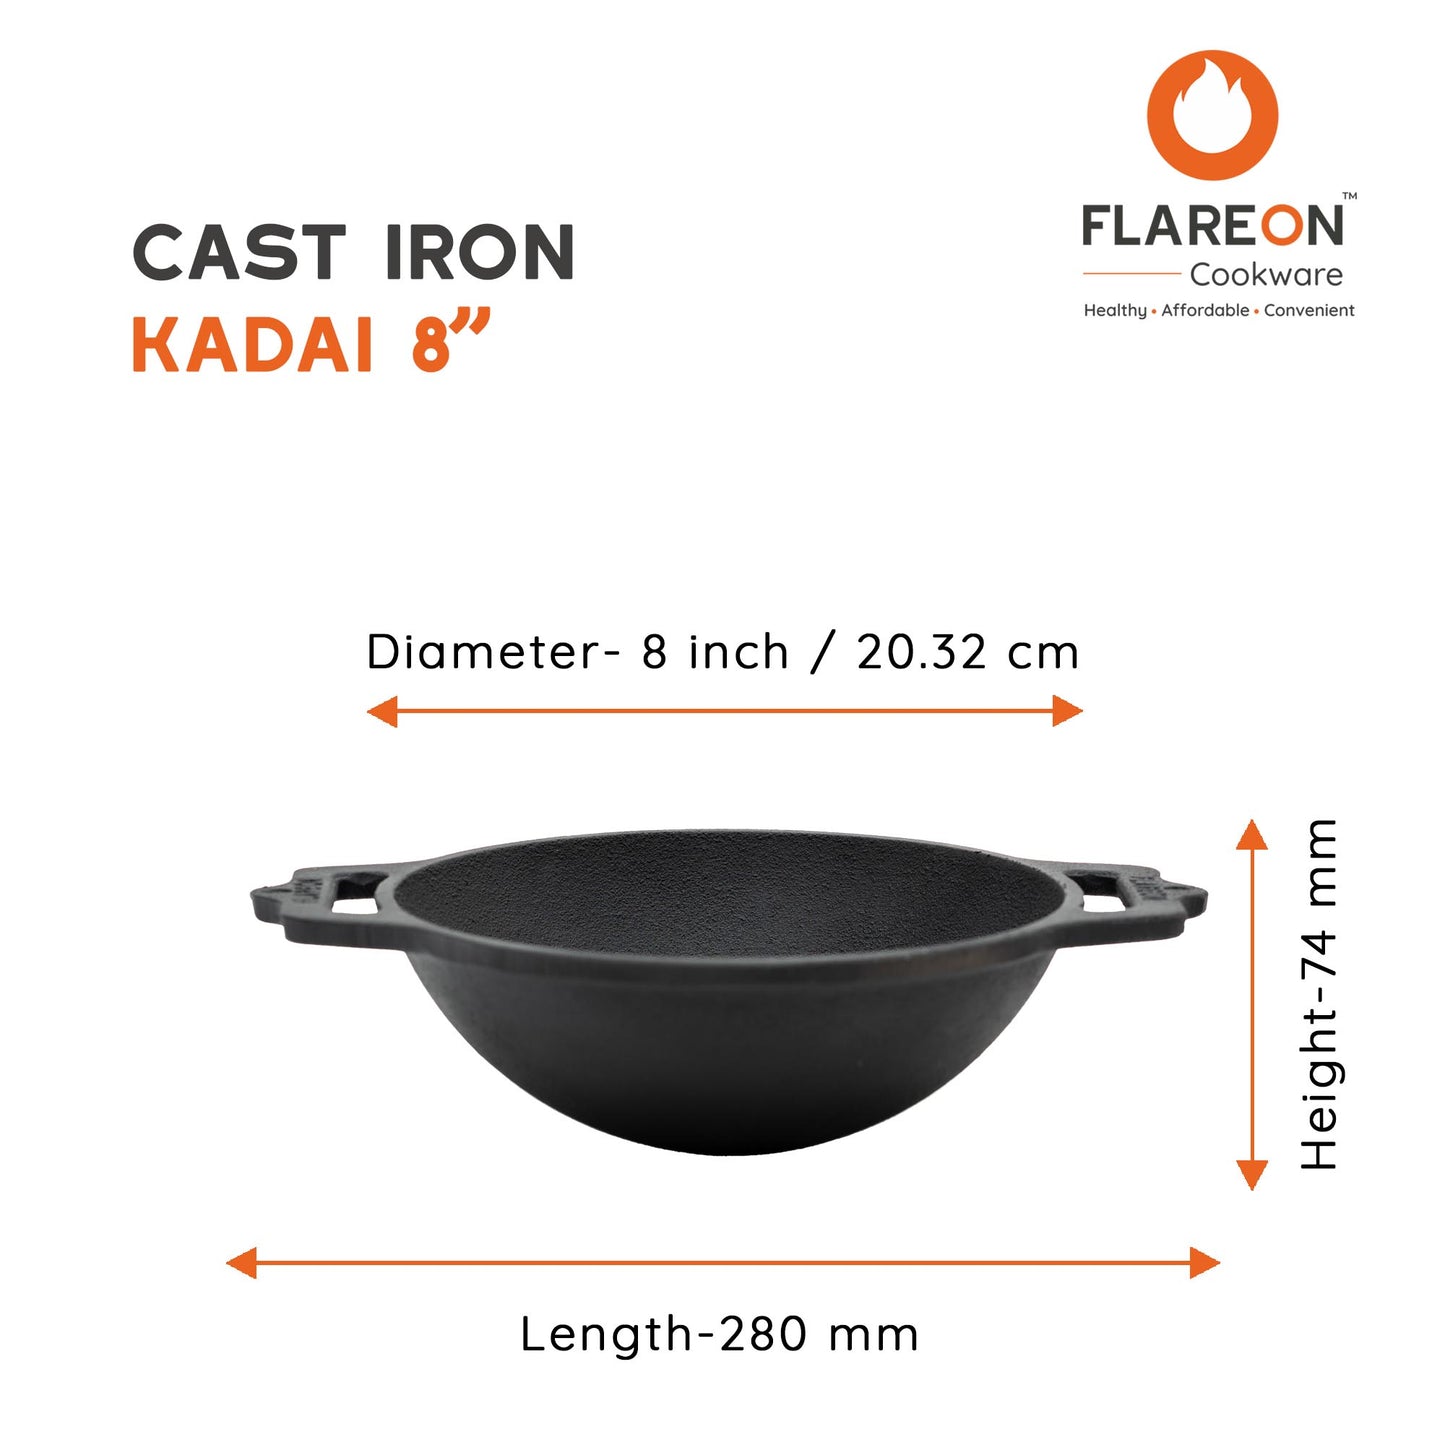 FlareOn's Cast Iron Kadai 8-Inch- Dimensions